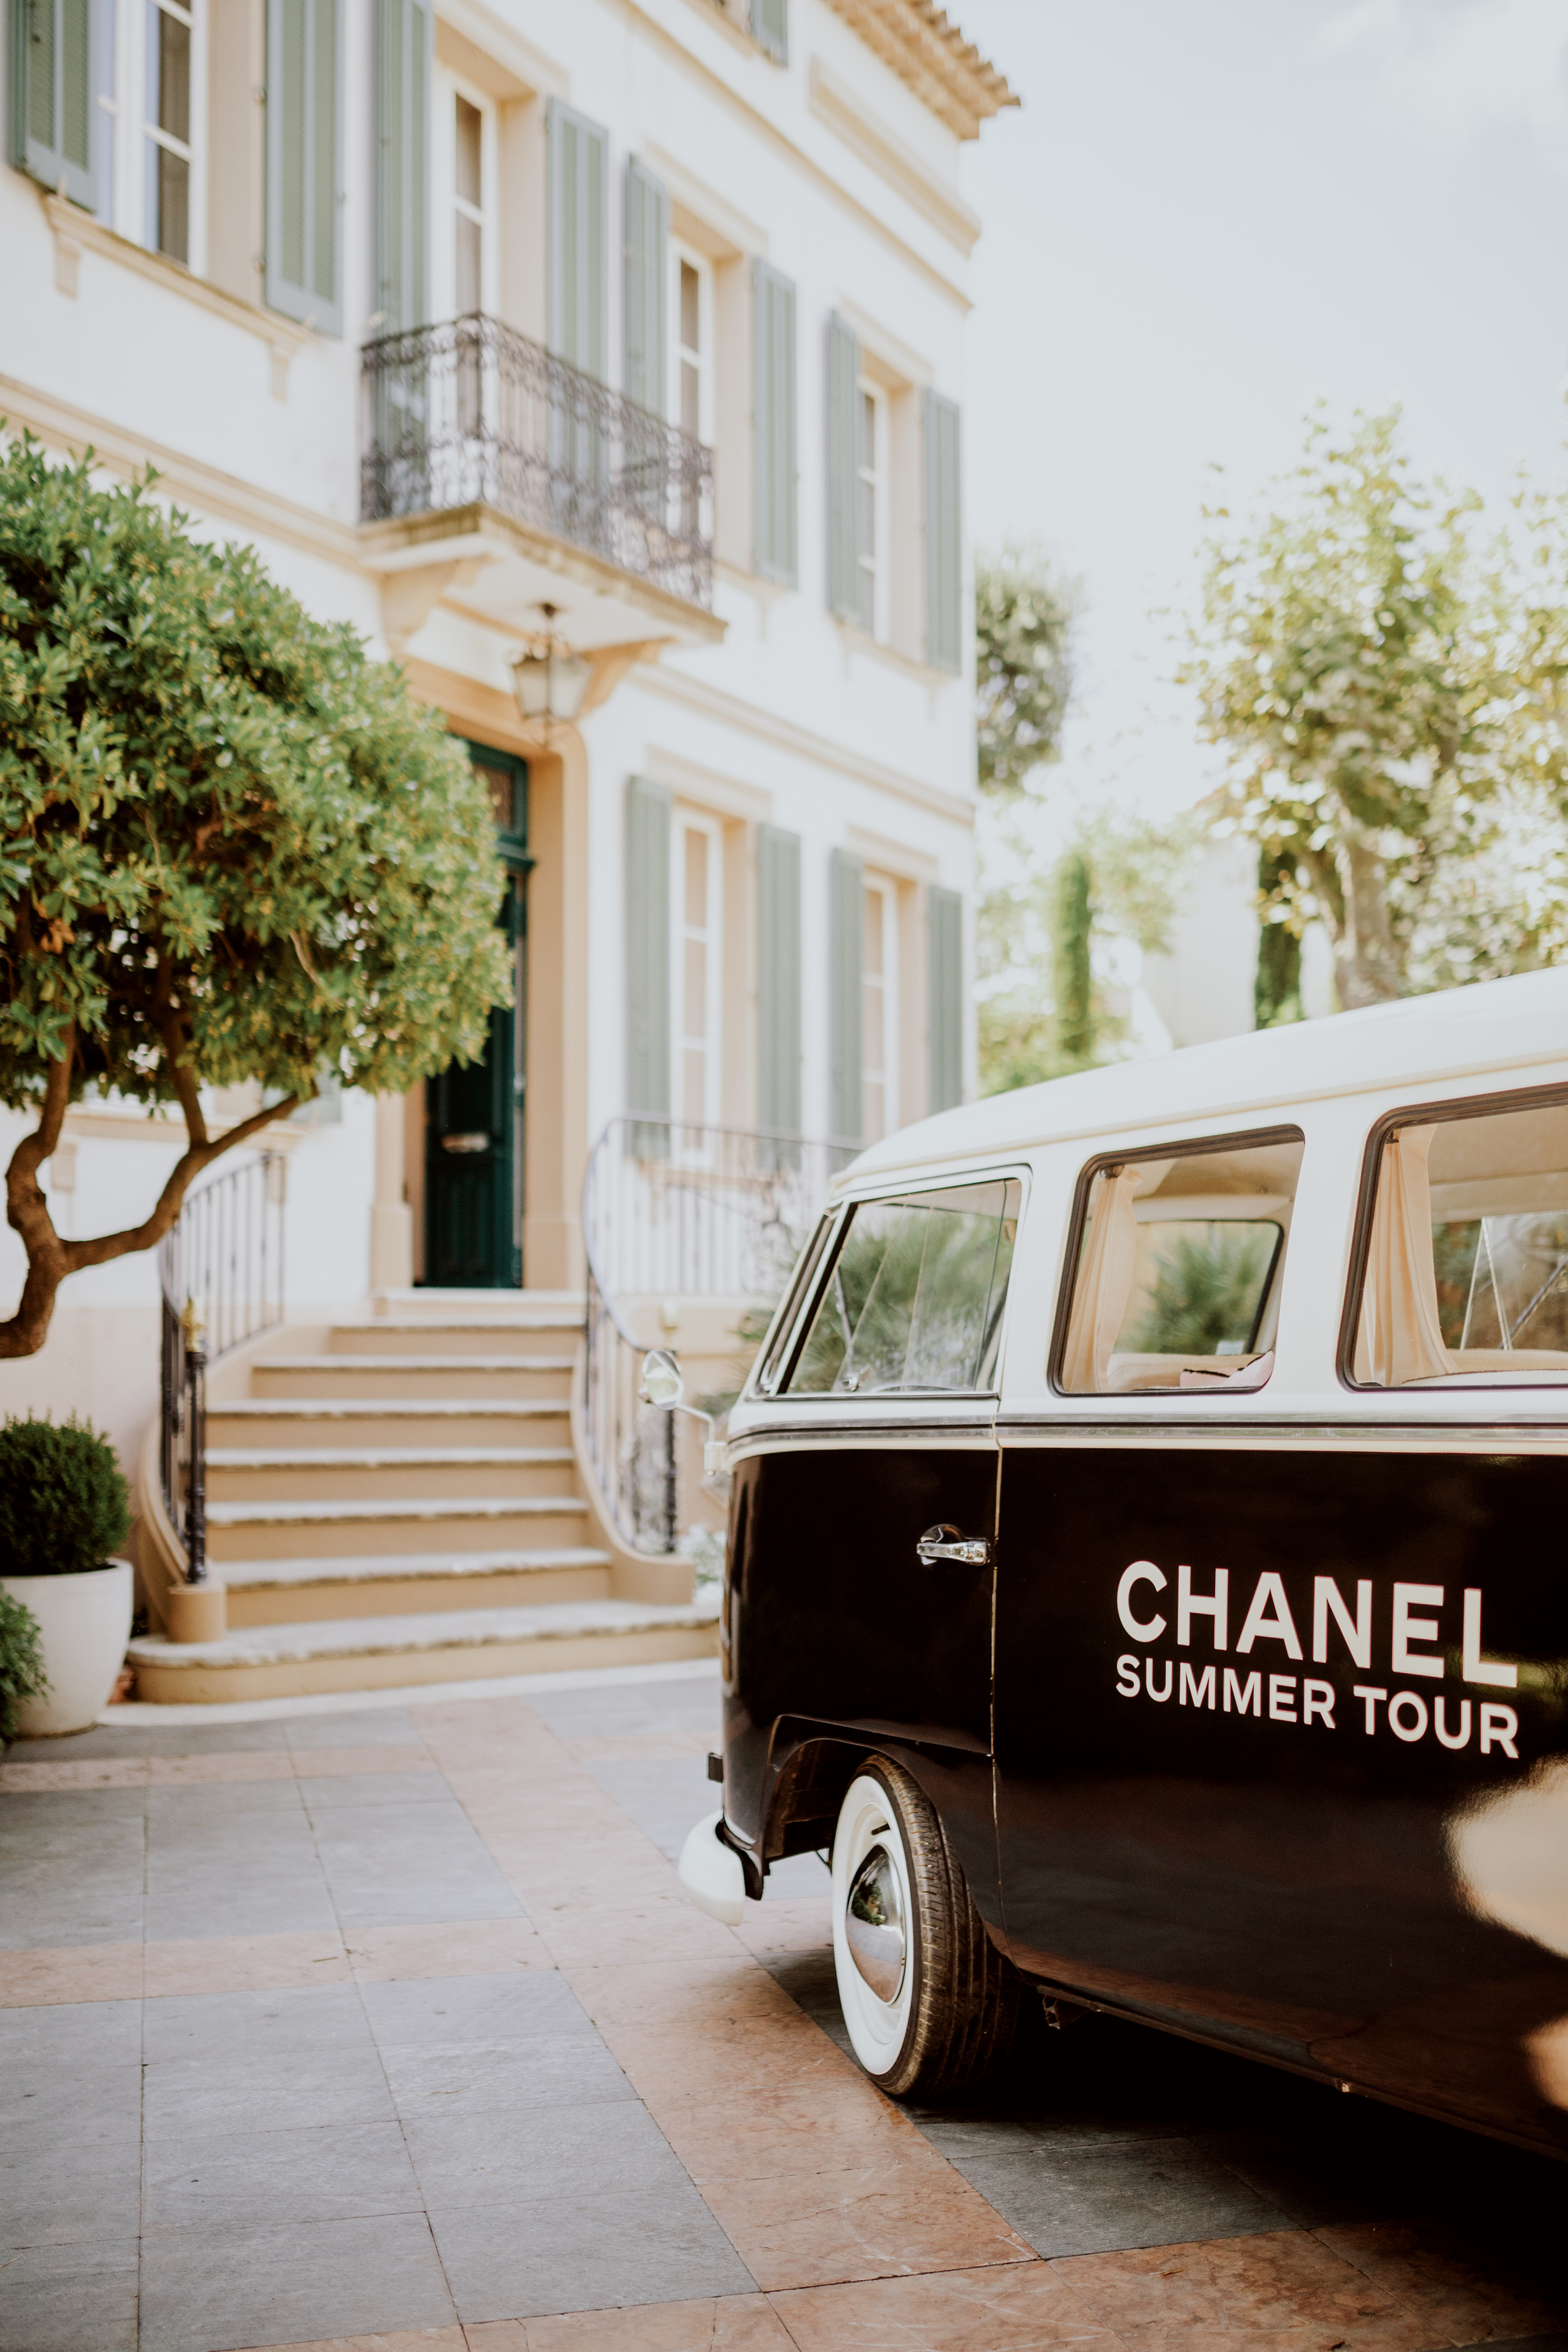 La furgoneta de Chanel en villa La Mistralée en Saint Tropez.